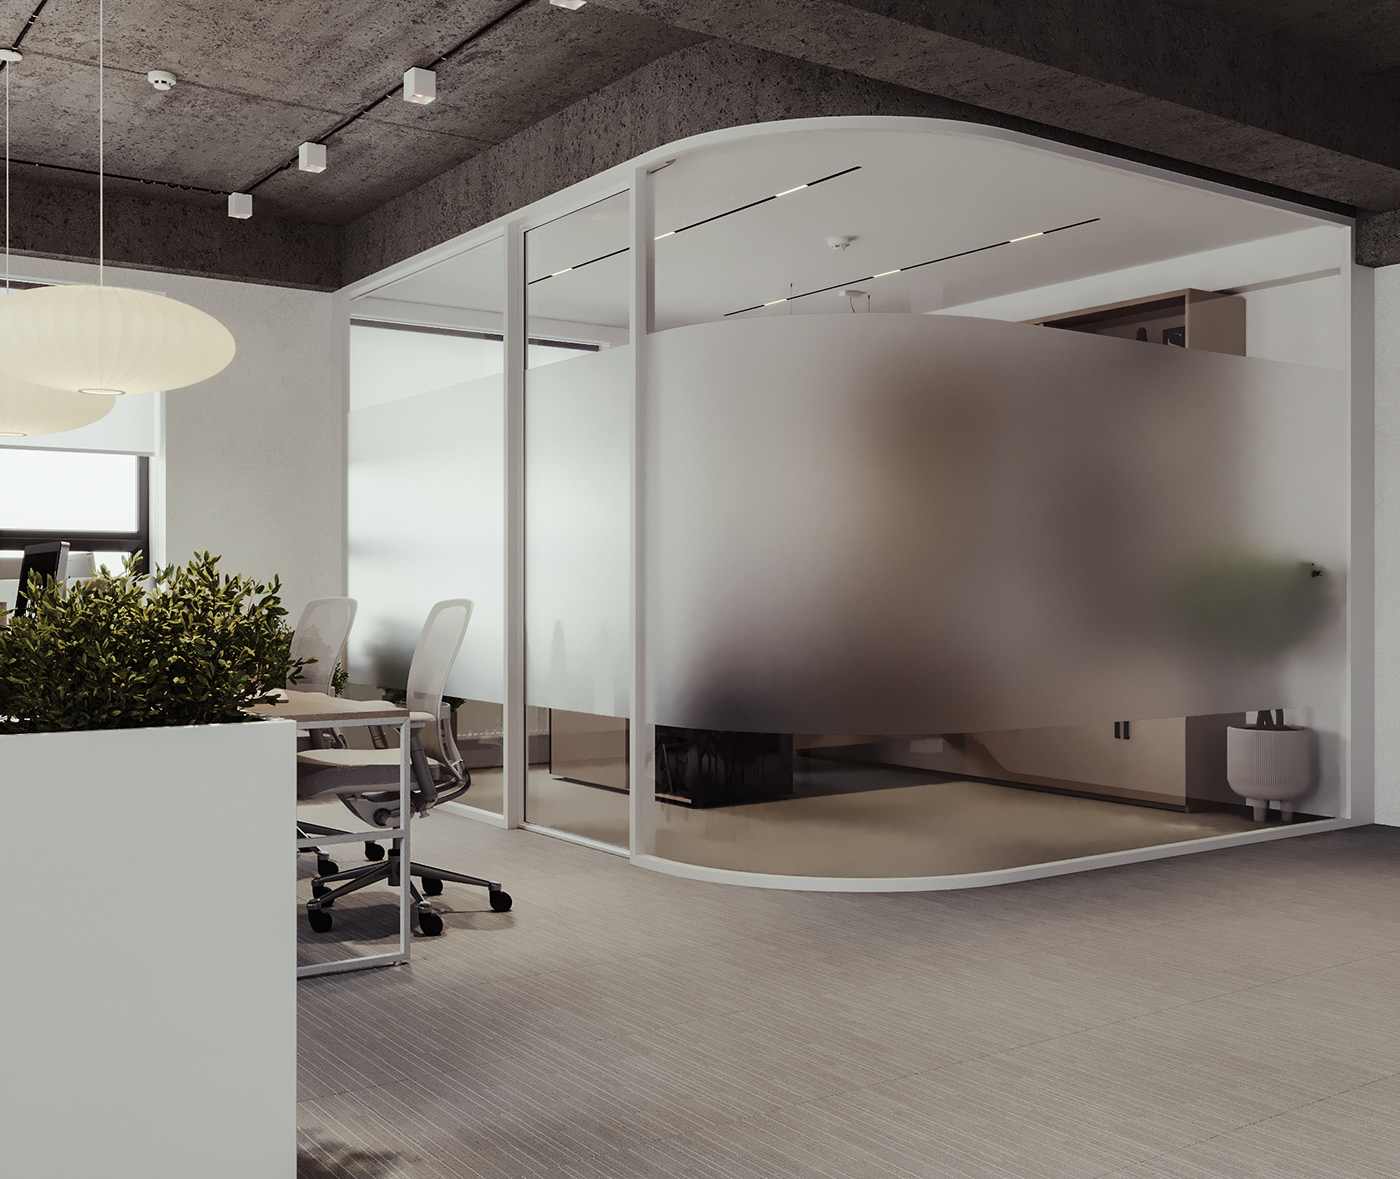 Japandi interior Office interior Office Design visualization 3ds max corona Render modern office furniture